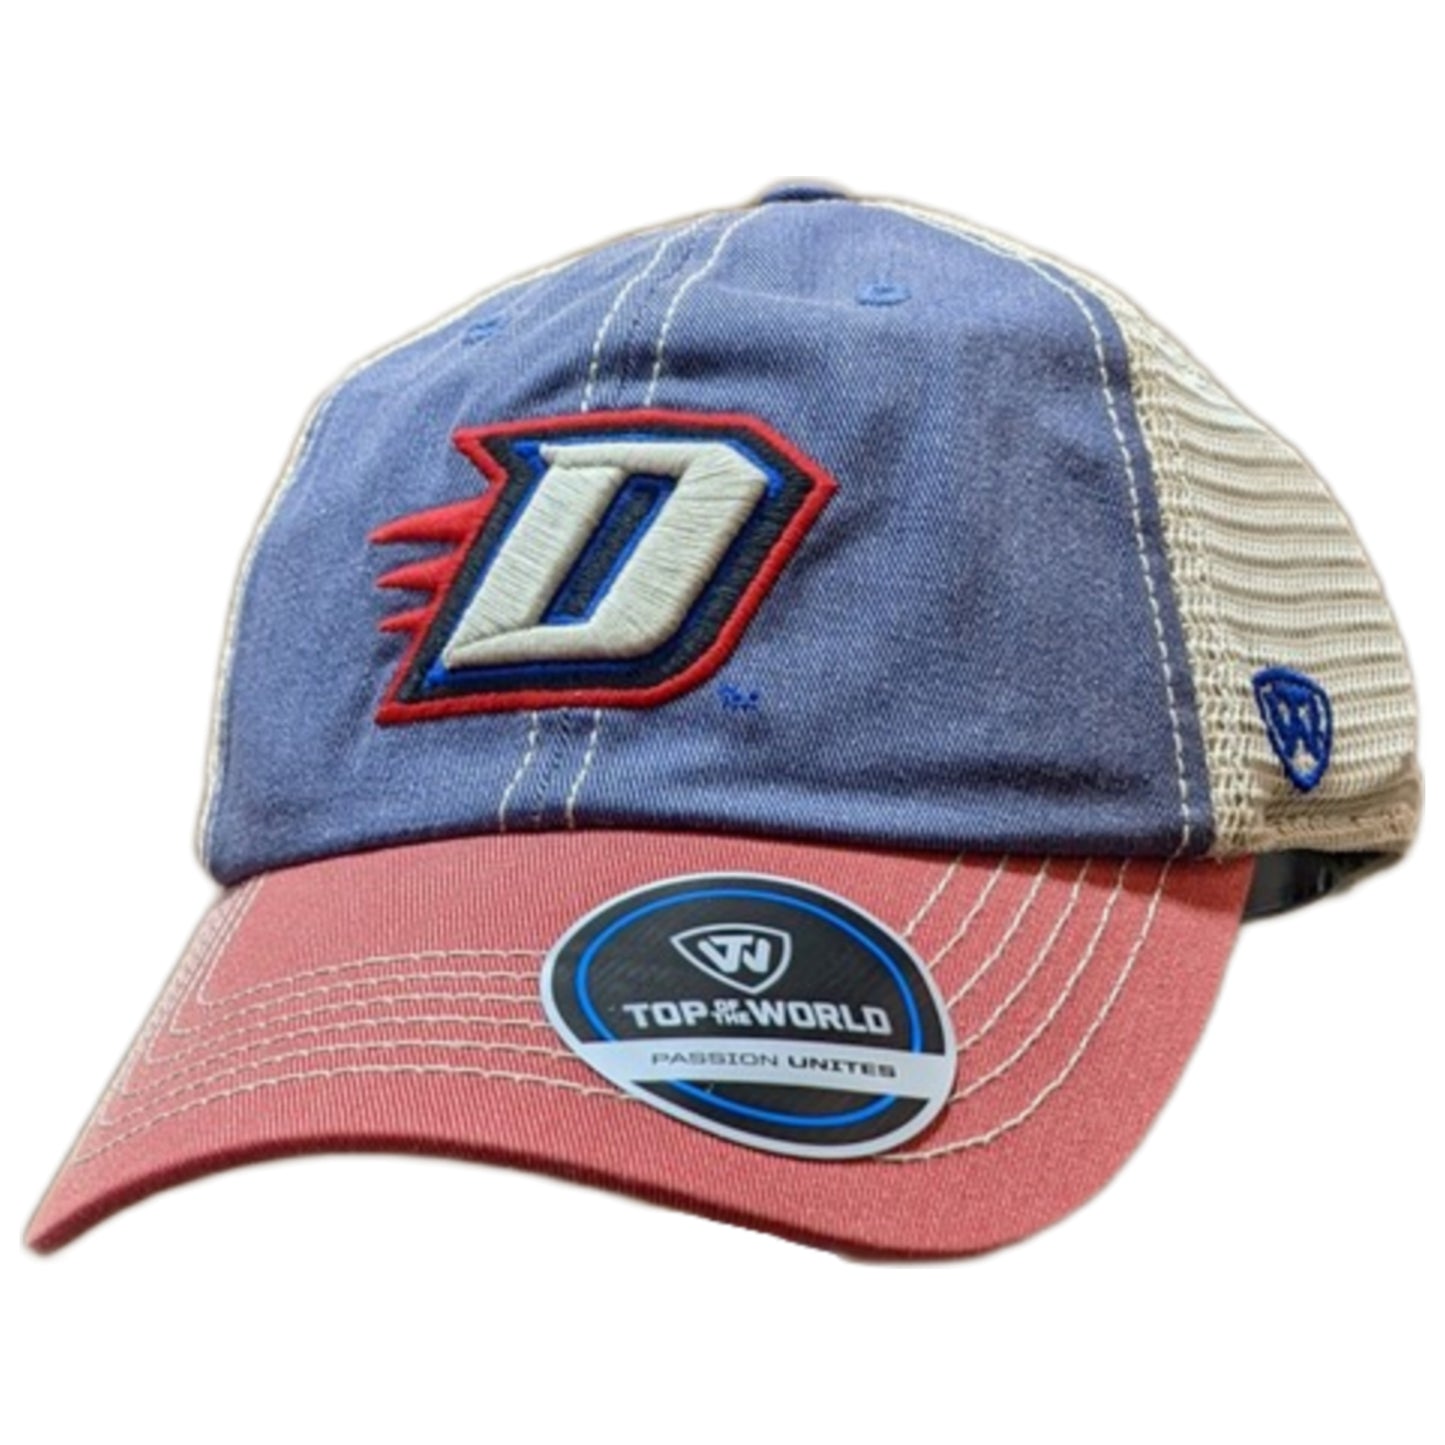 DePaul Blue Demons Blue Offroad Trucker Adjustable Top of the World Hat